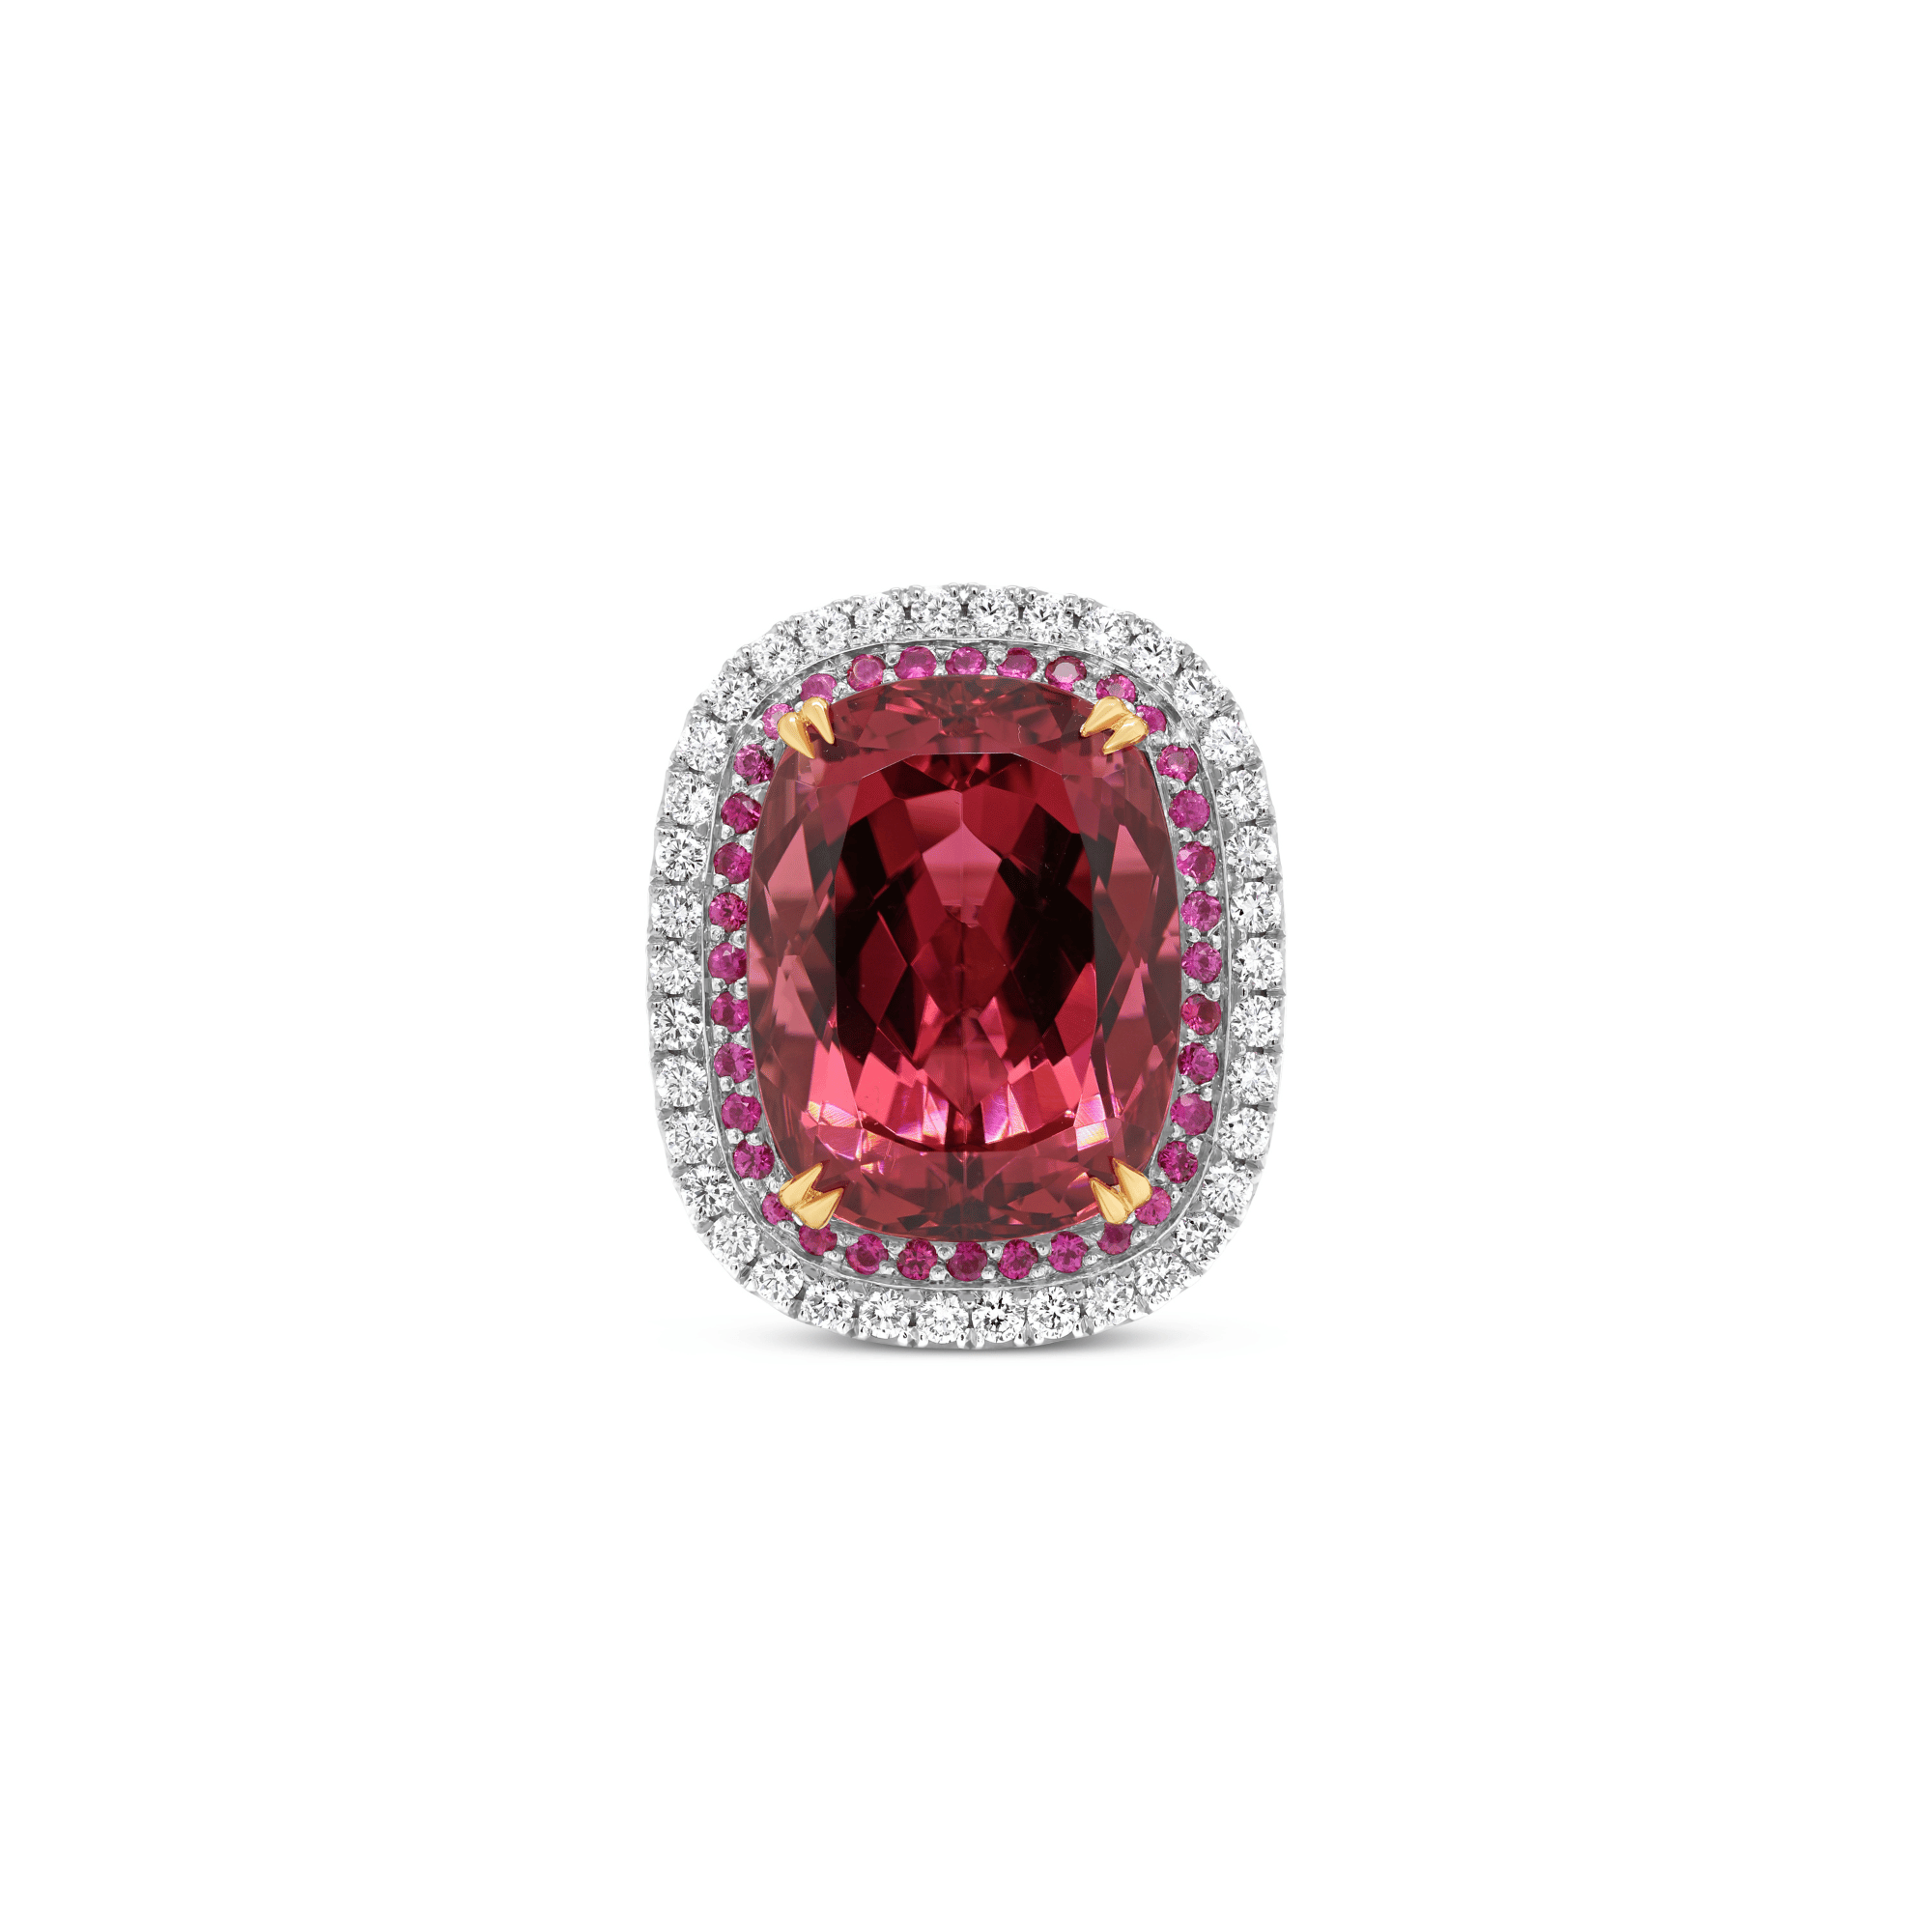 PInk tourmaline pink sapphire and diamond cocktail dress ring